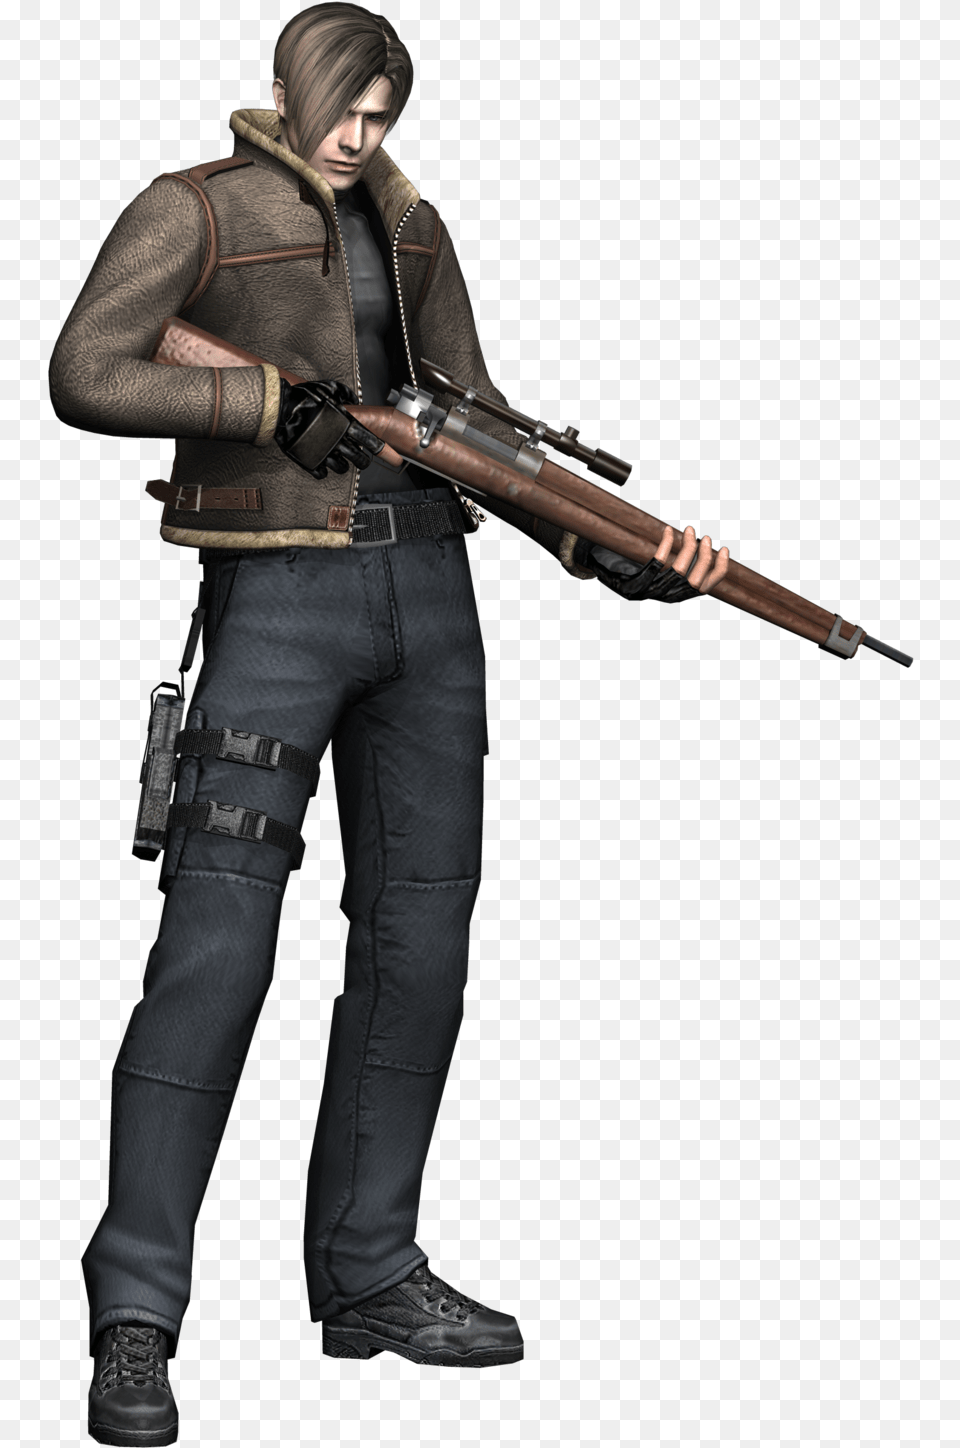 Ashley Graham Resident Evil Leon Shotgun, Weapon, Gun, Pants, Firearm Png Image